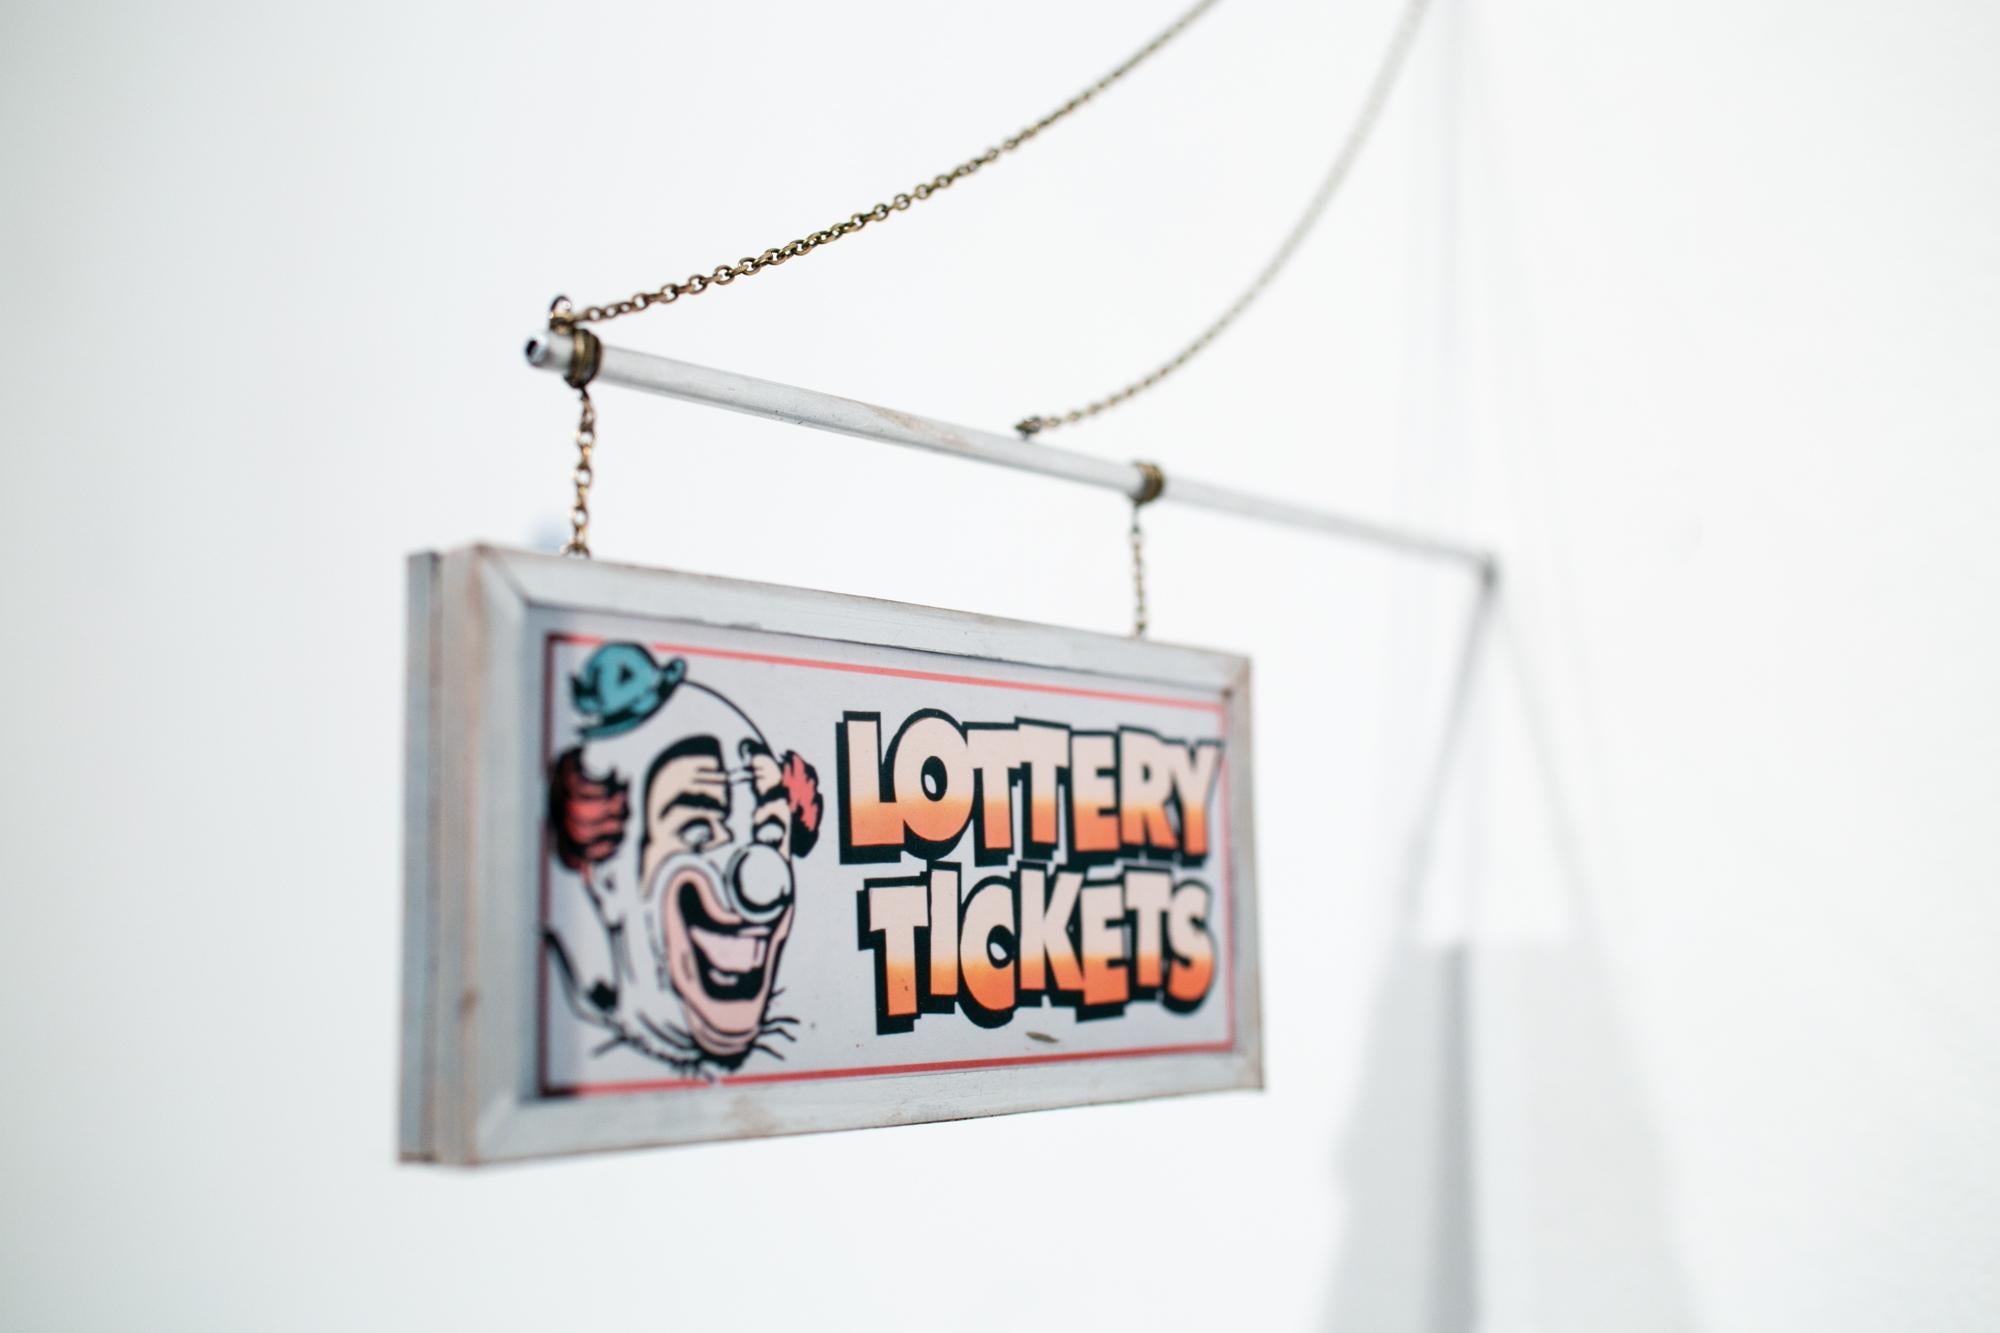 Pete's Lottery Tickets - Art by Drew Leshko